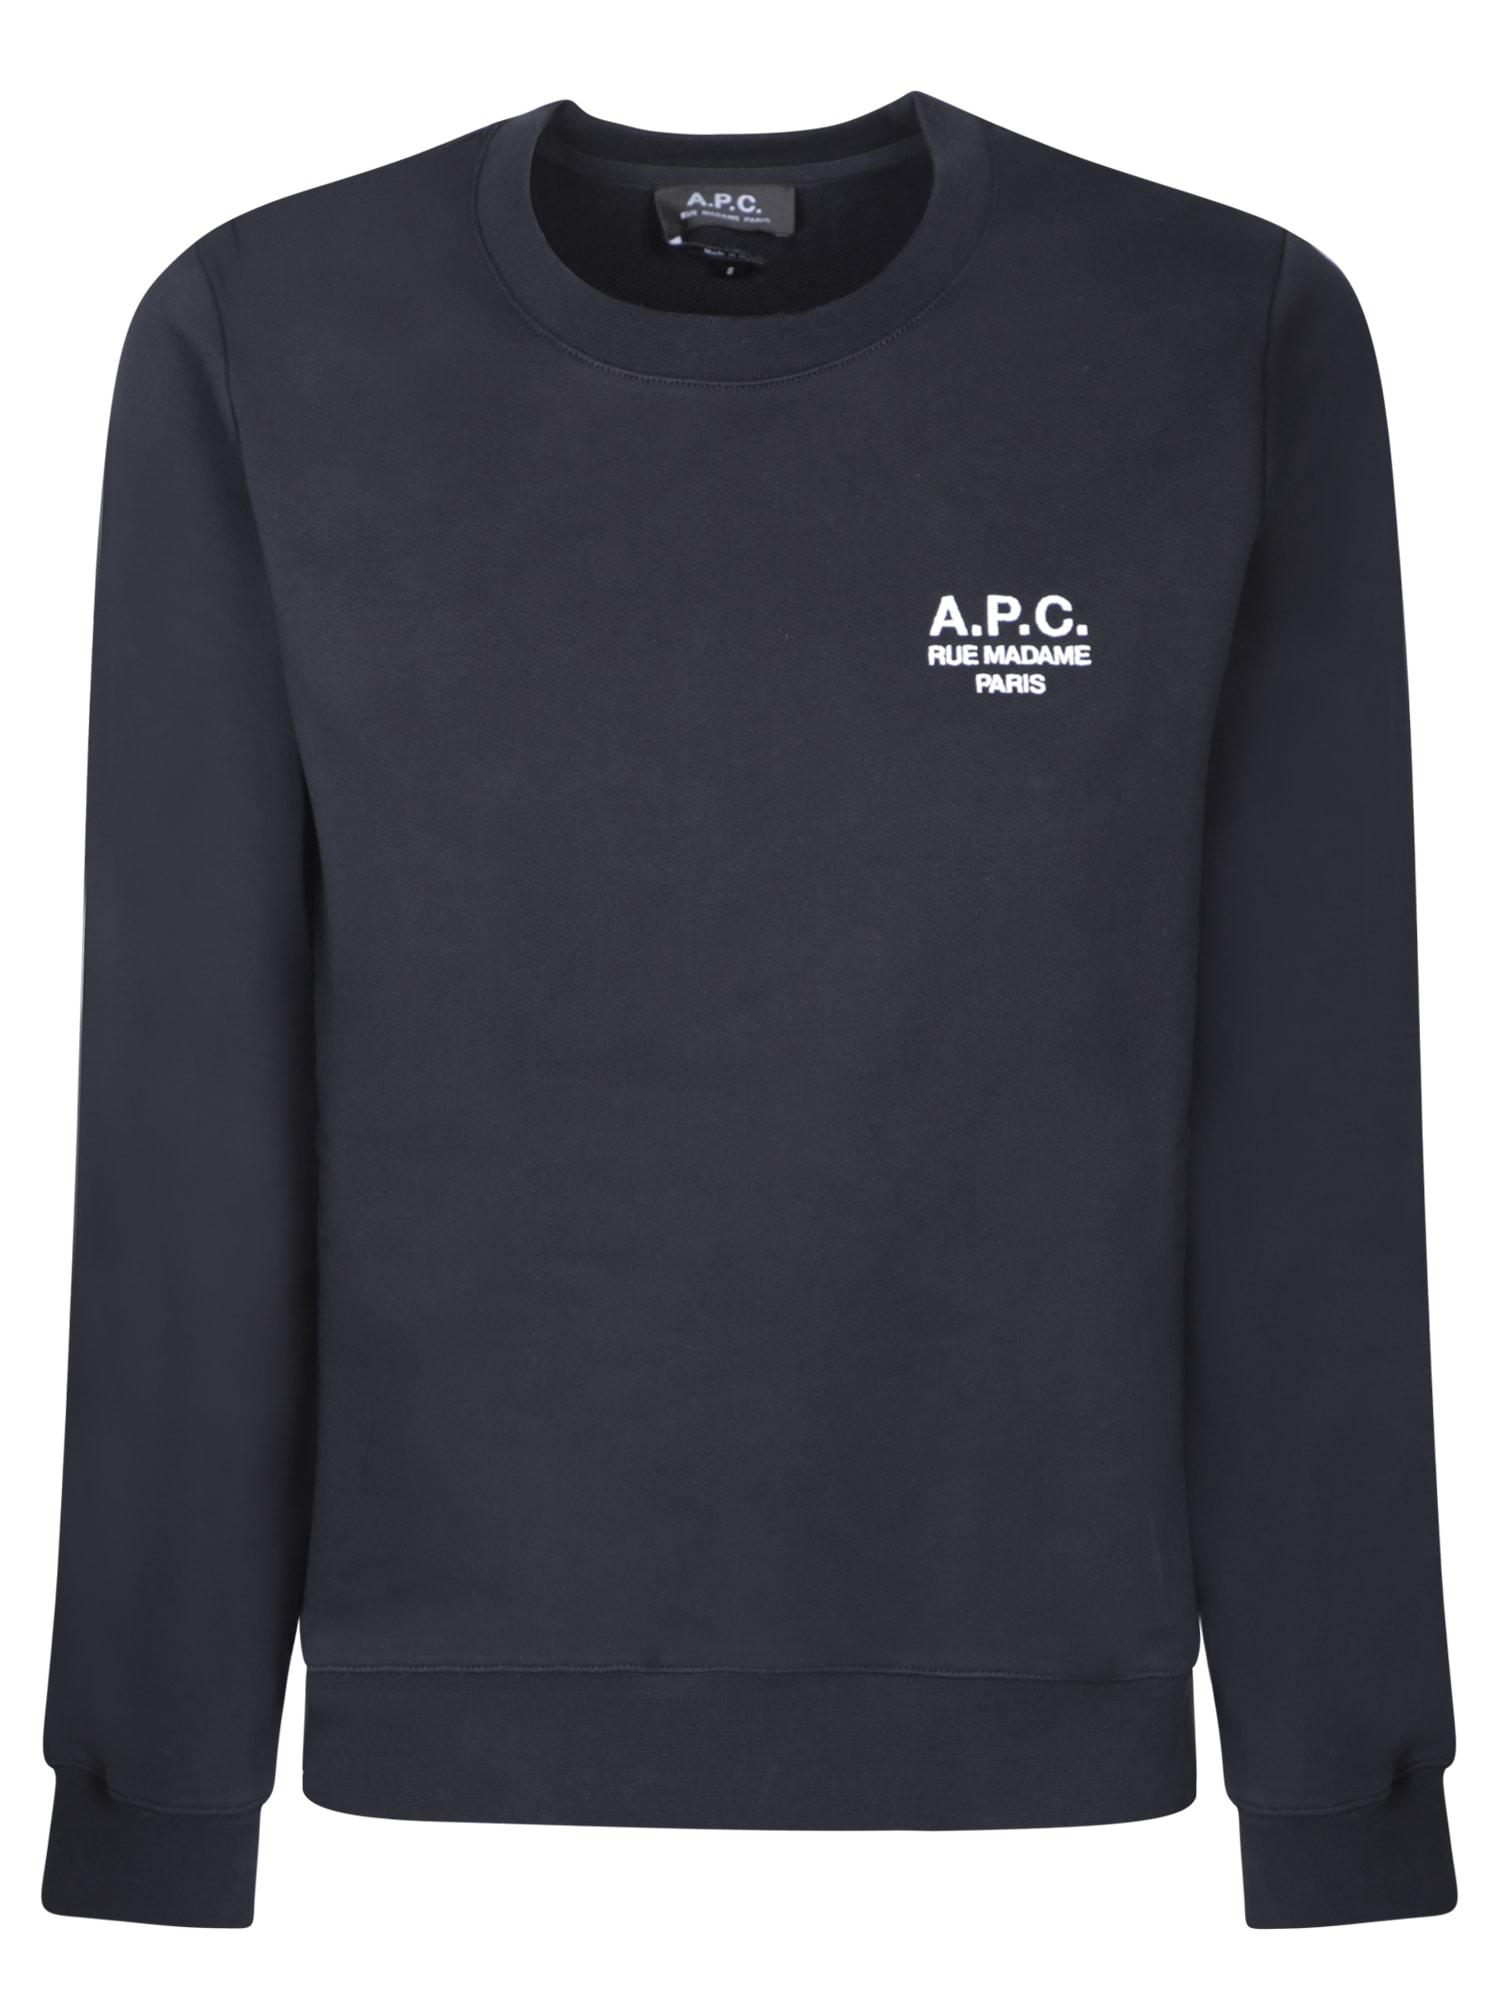 Apc Skye Black Sweatshirt